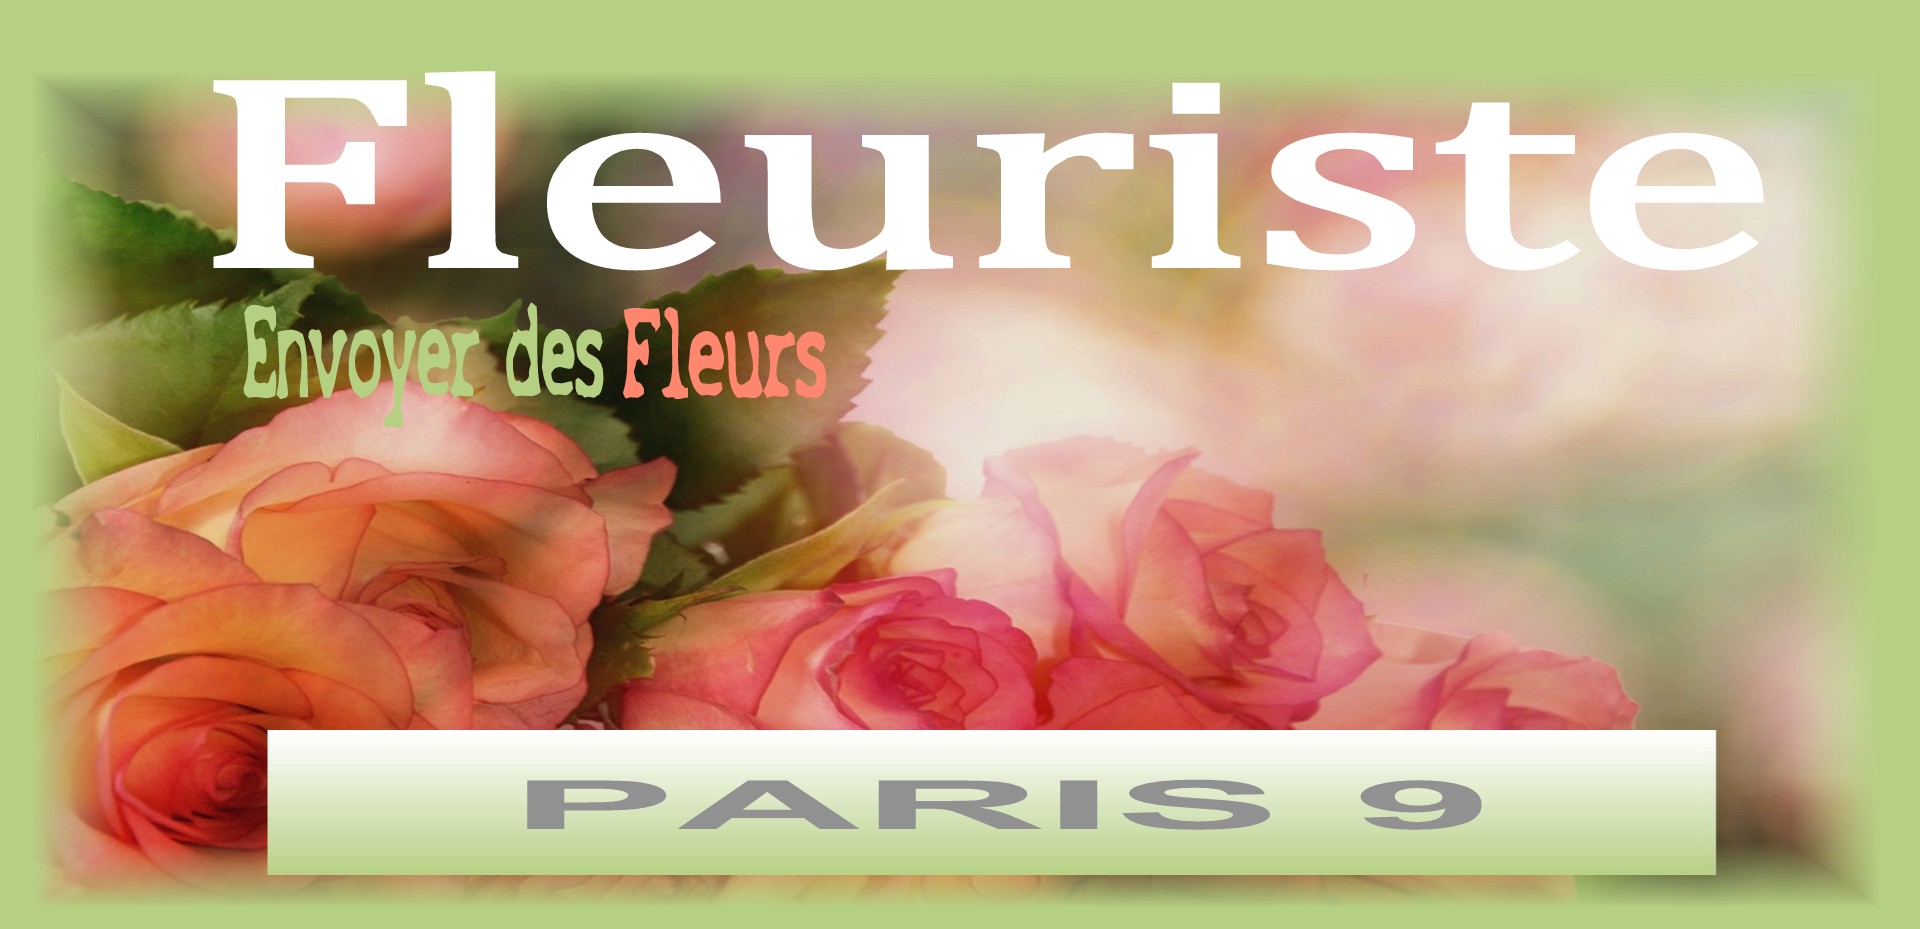 FLEURISTE PARIS 9